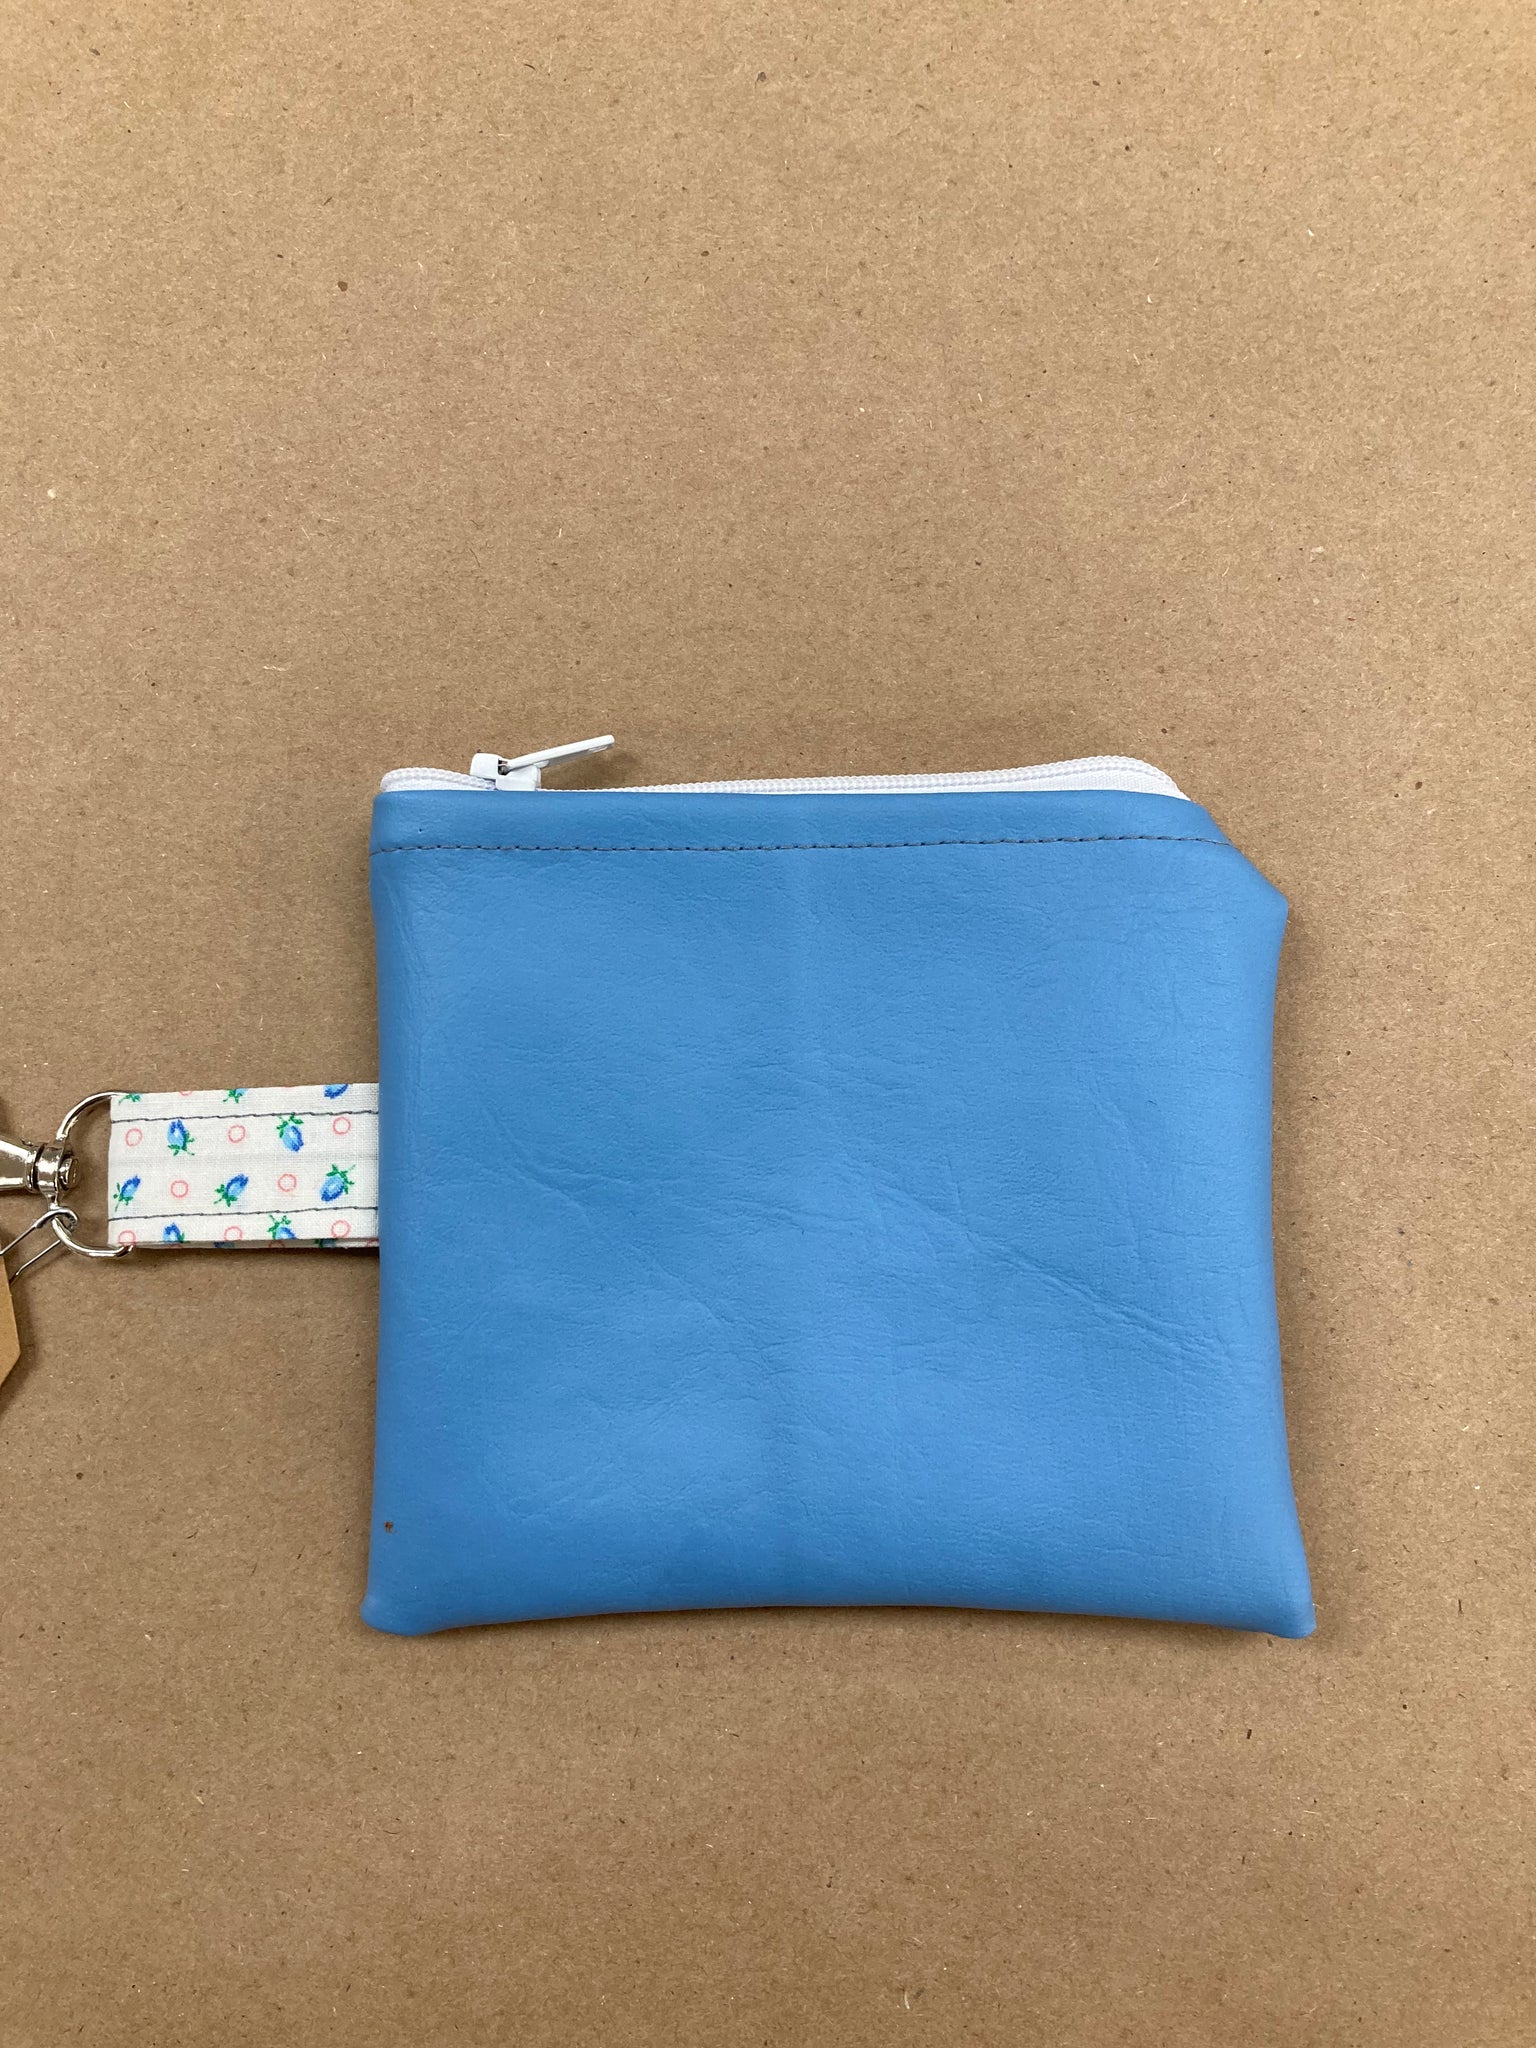 Vegan Leather Zip Pouch 5x5" w/Claw Clasp - Light Blue